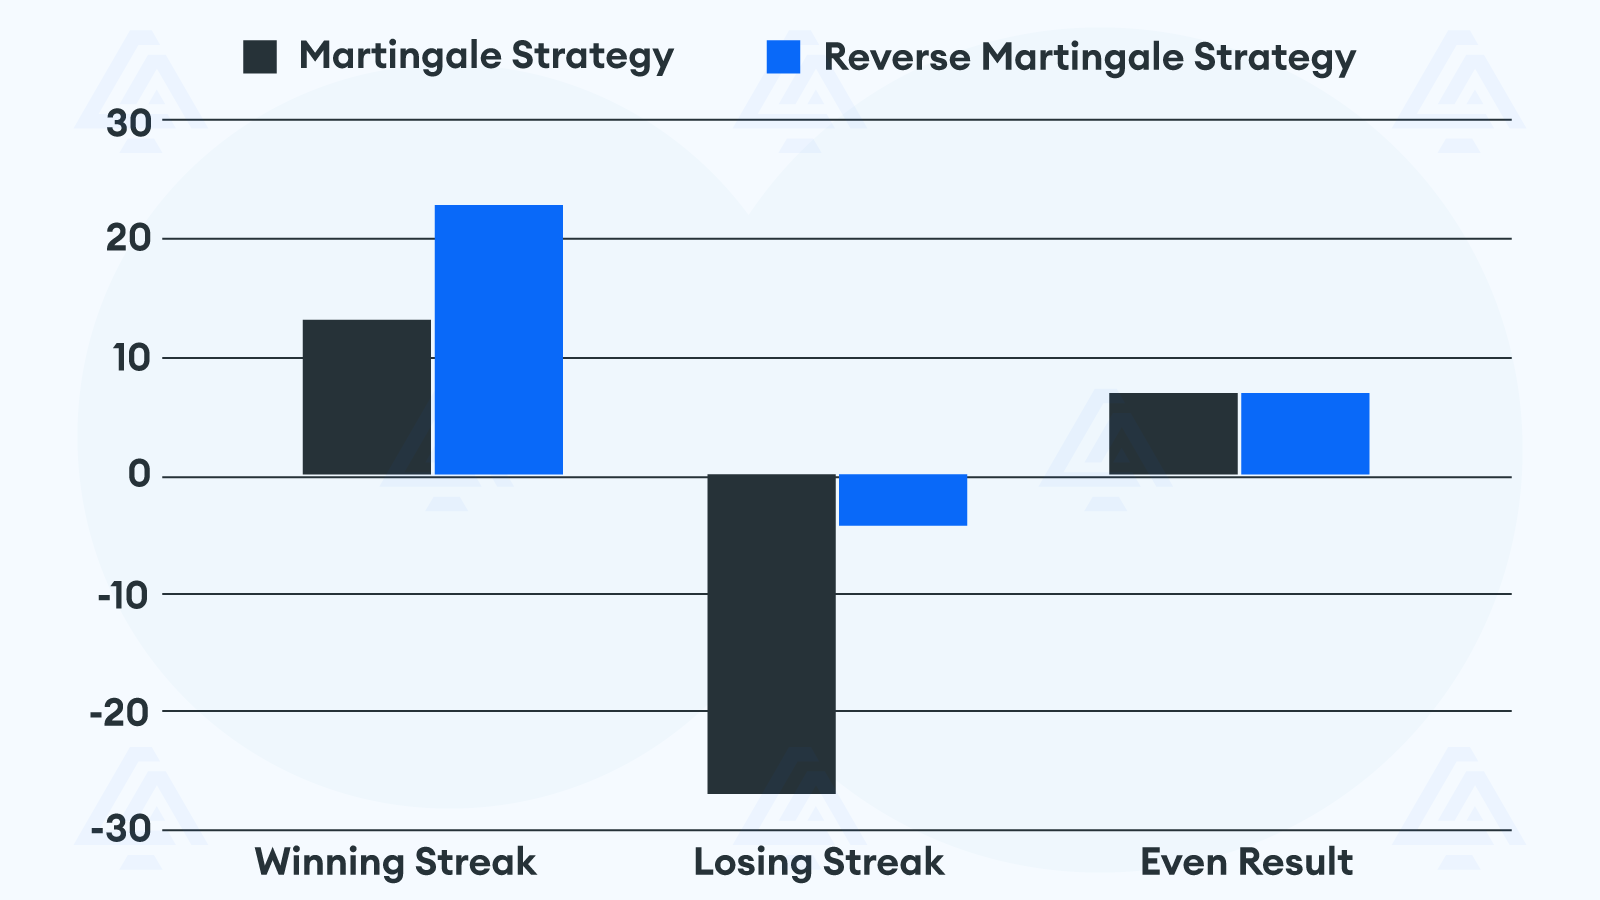 Anti-Martingale strategy outcomes compared